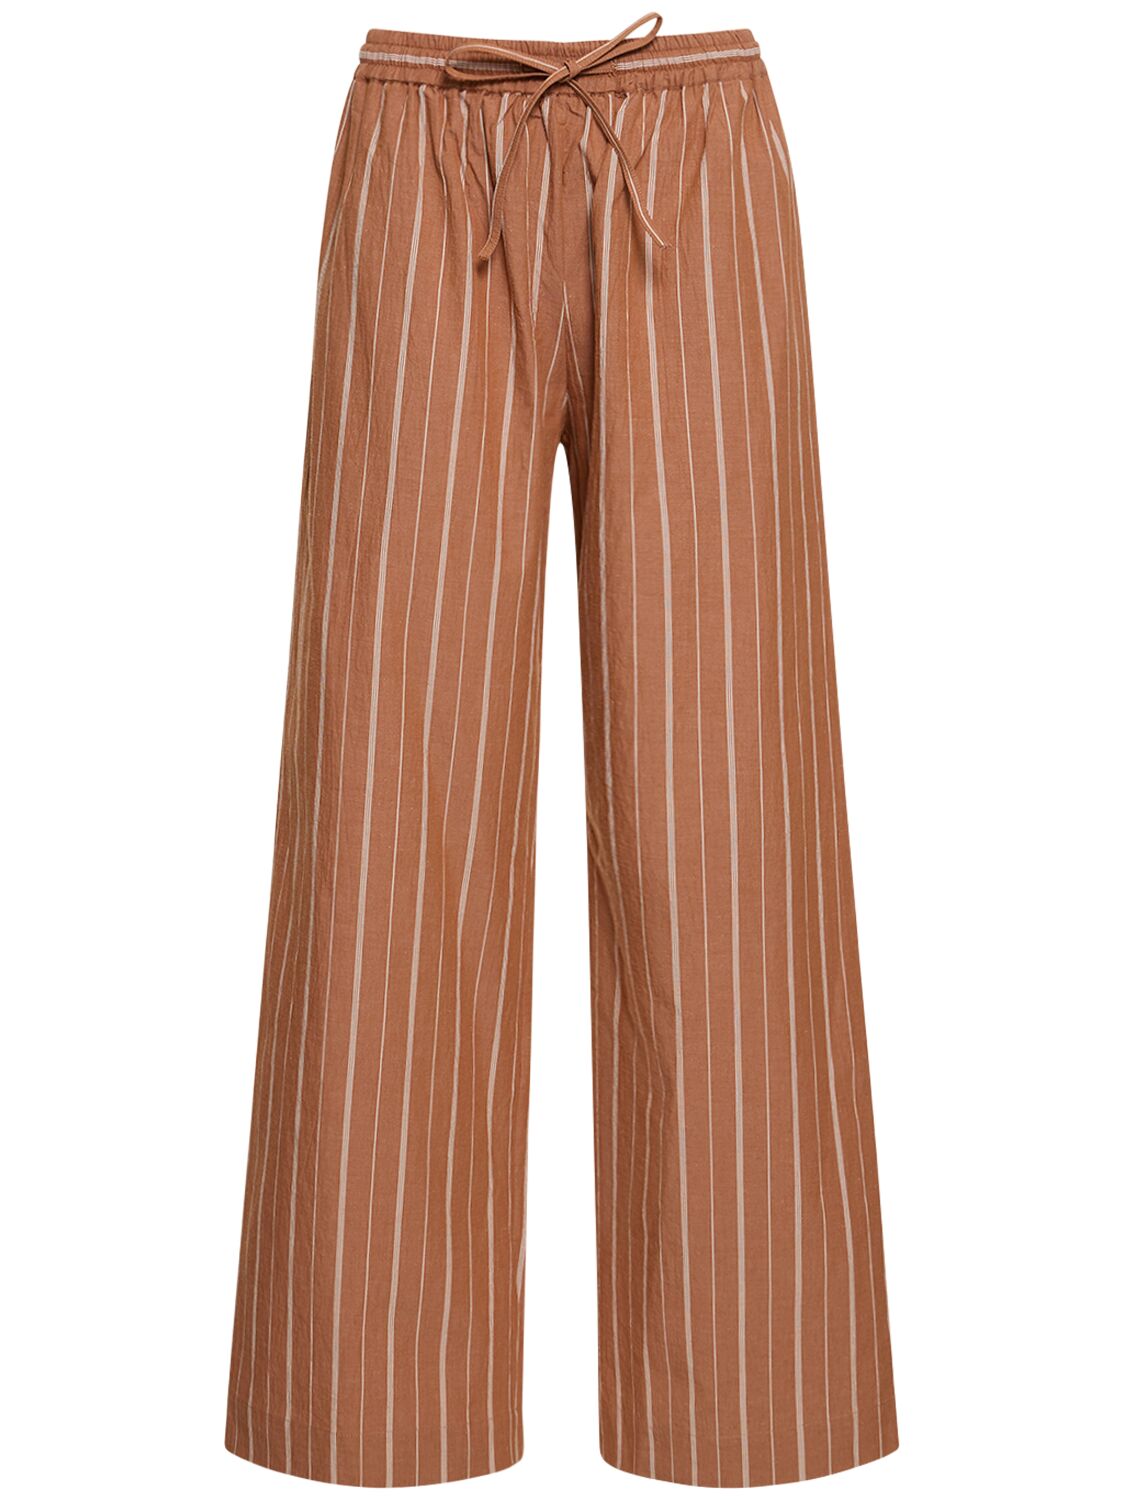 Matteau Striped Cotton & Linen Pants In Orange,multi